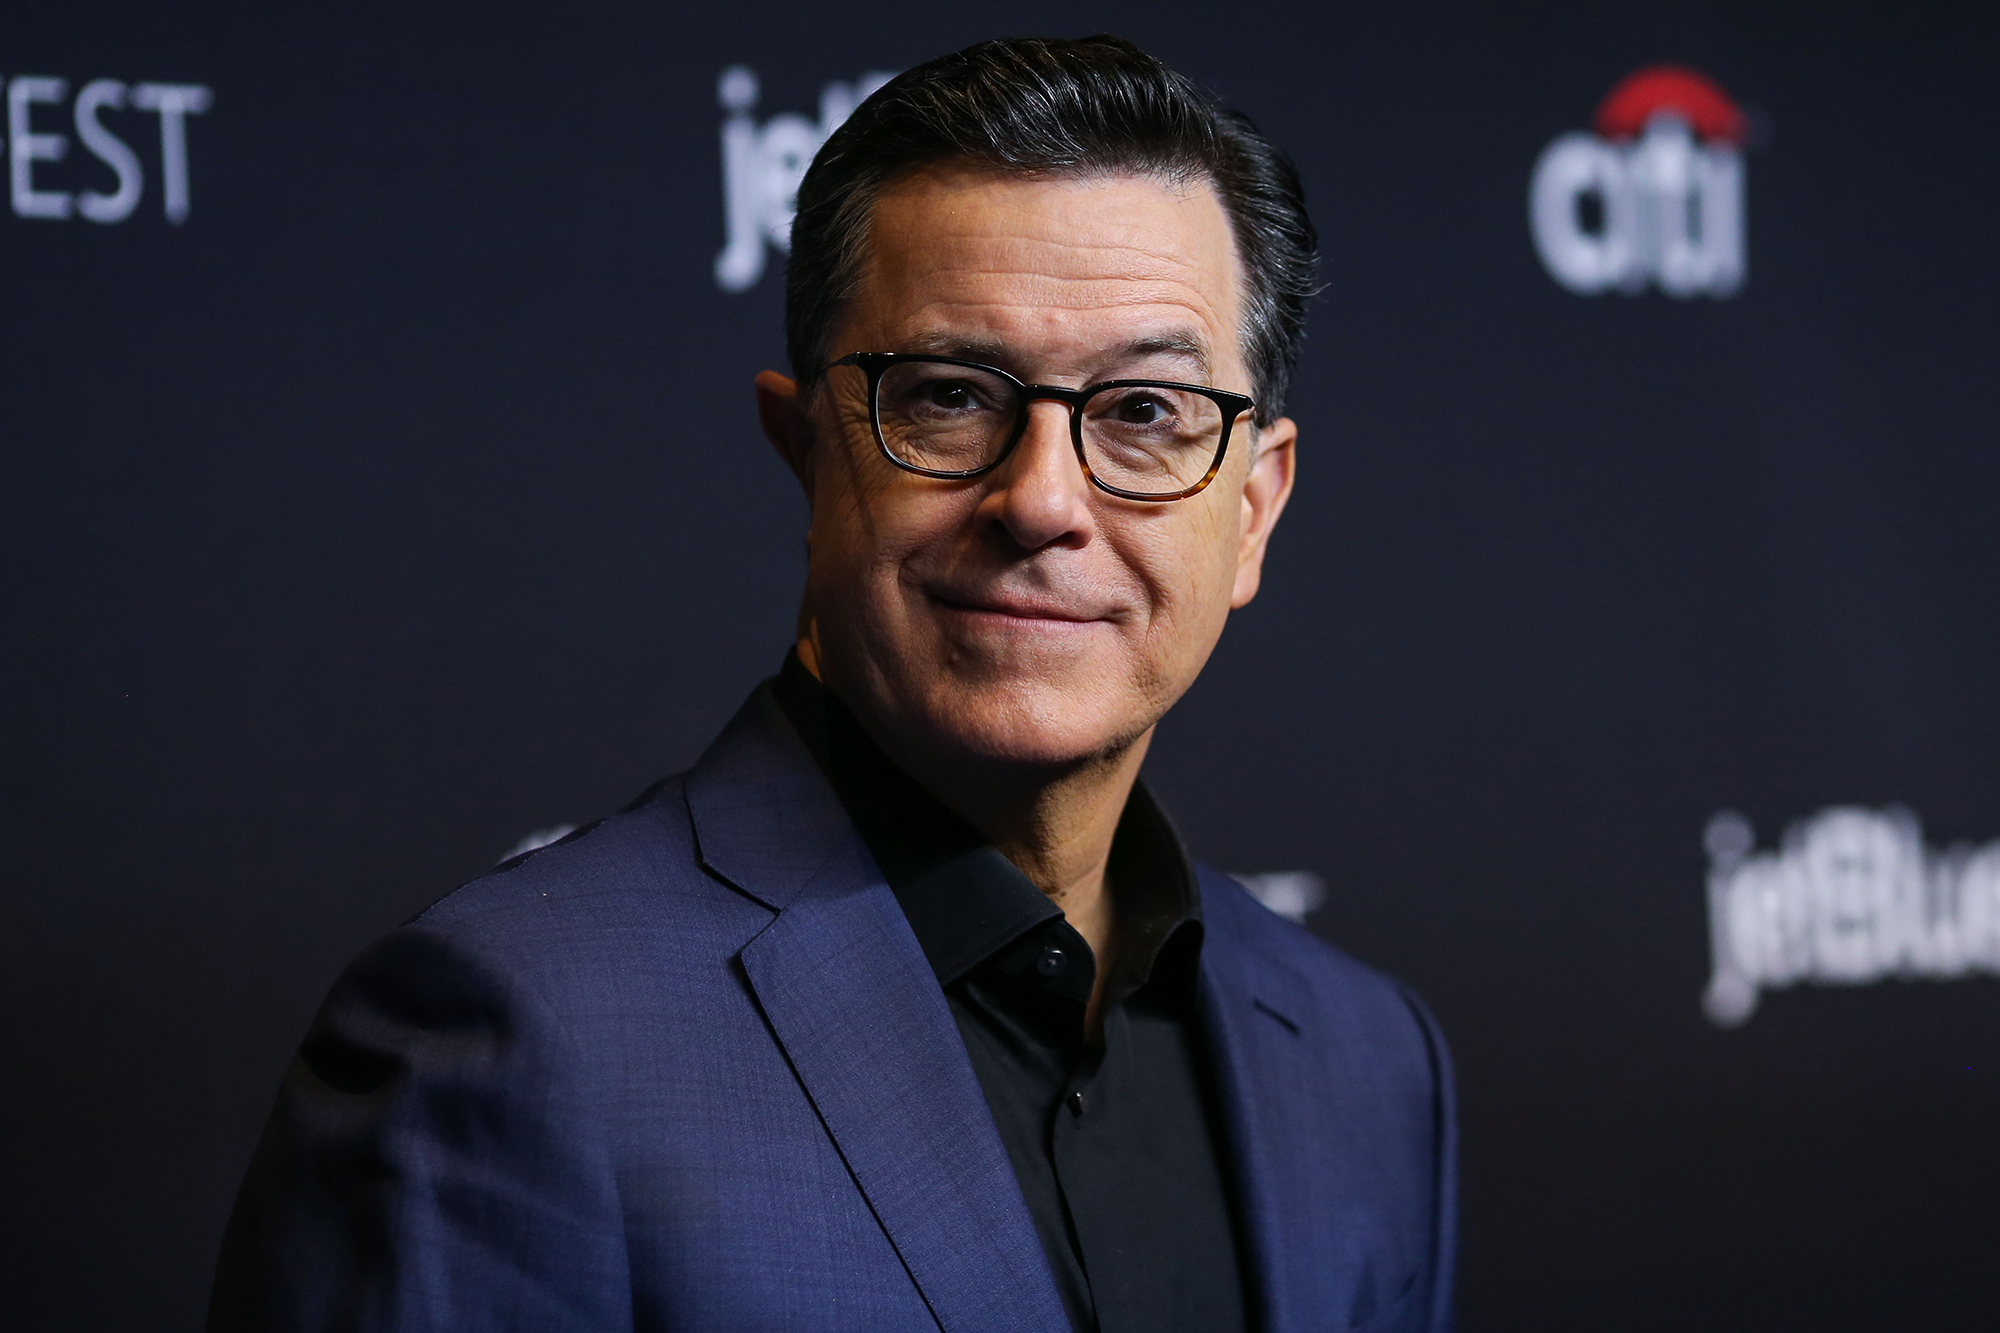 2019 PaleyFest LA - CBS's 'An Evening with Stephen Colbert'